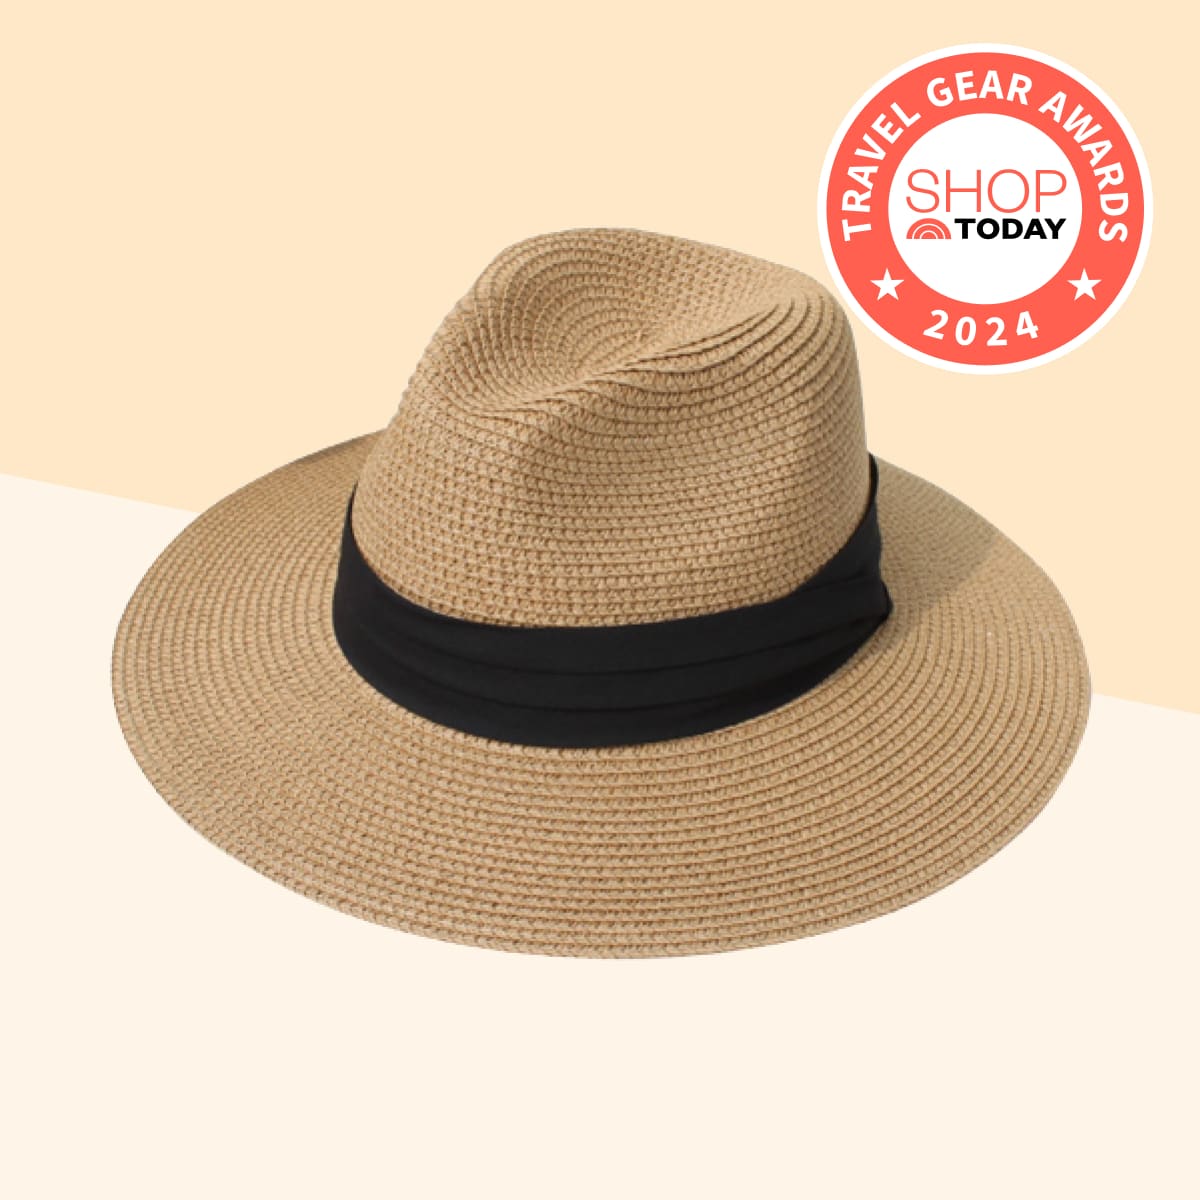 Stylish Hats For Women Summer - Shop on Pinterest